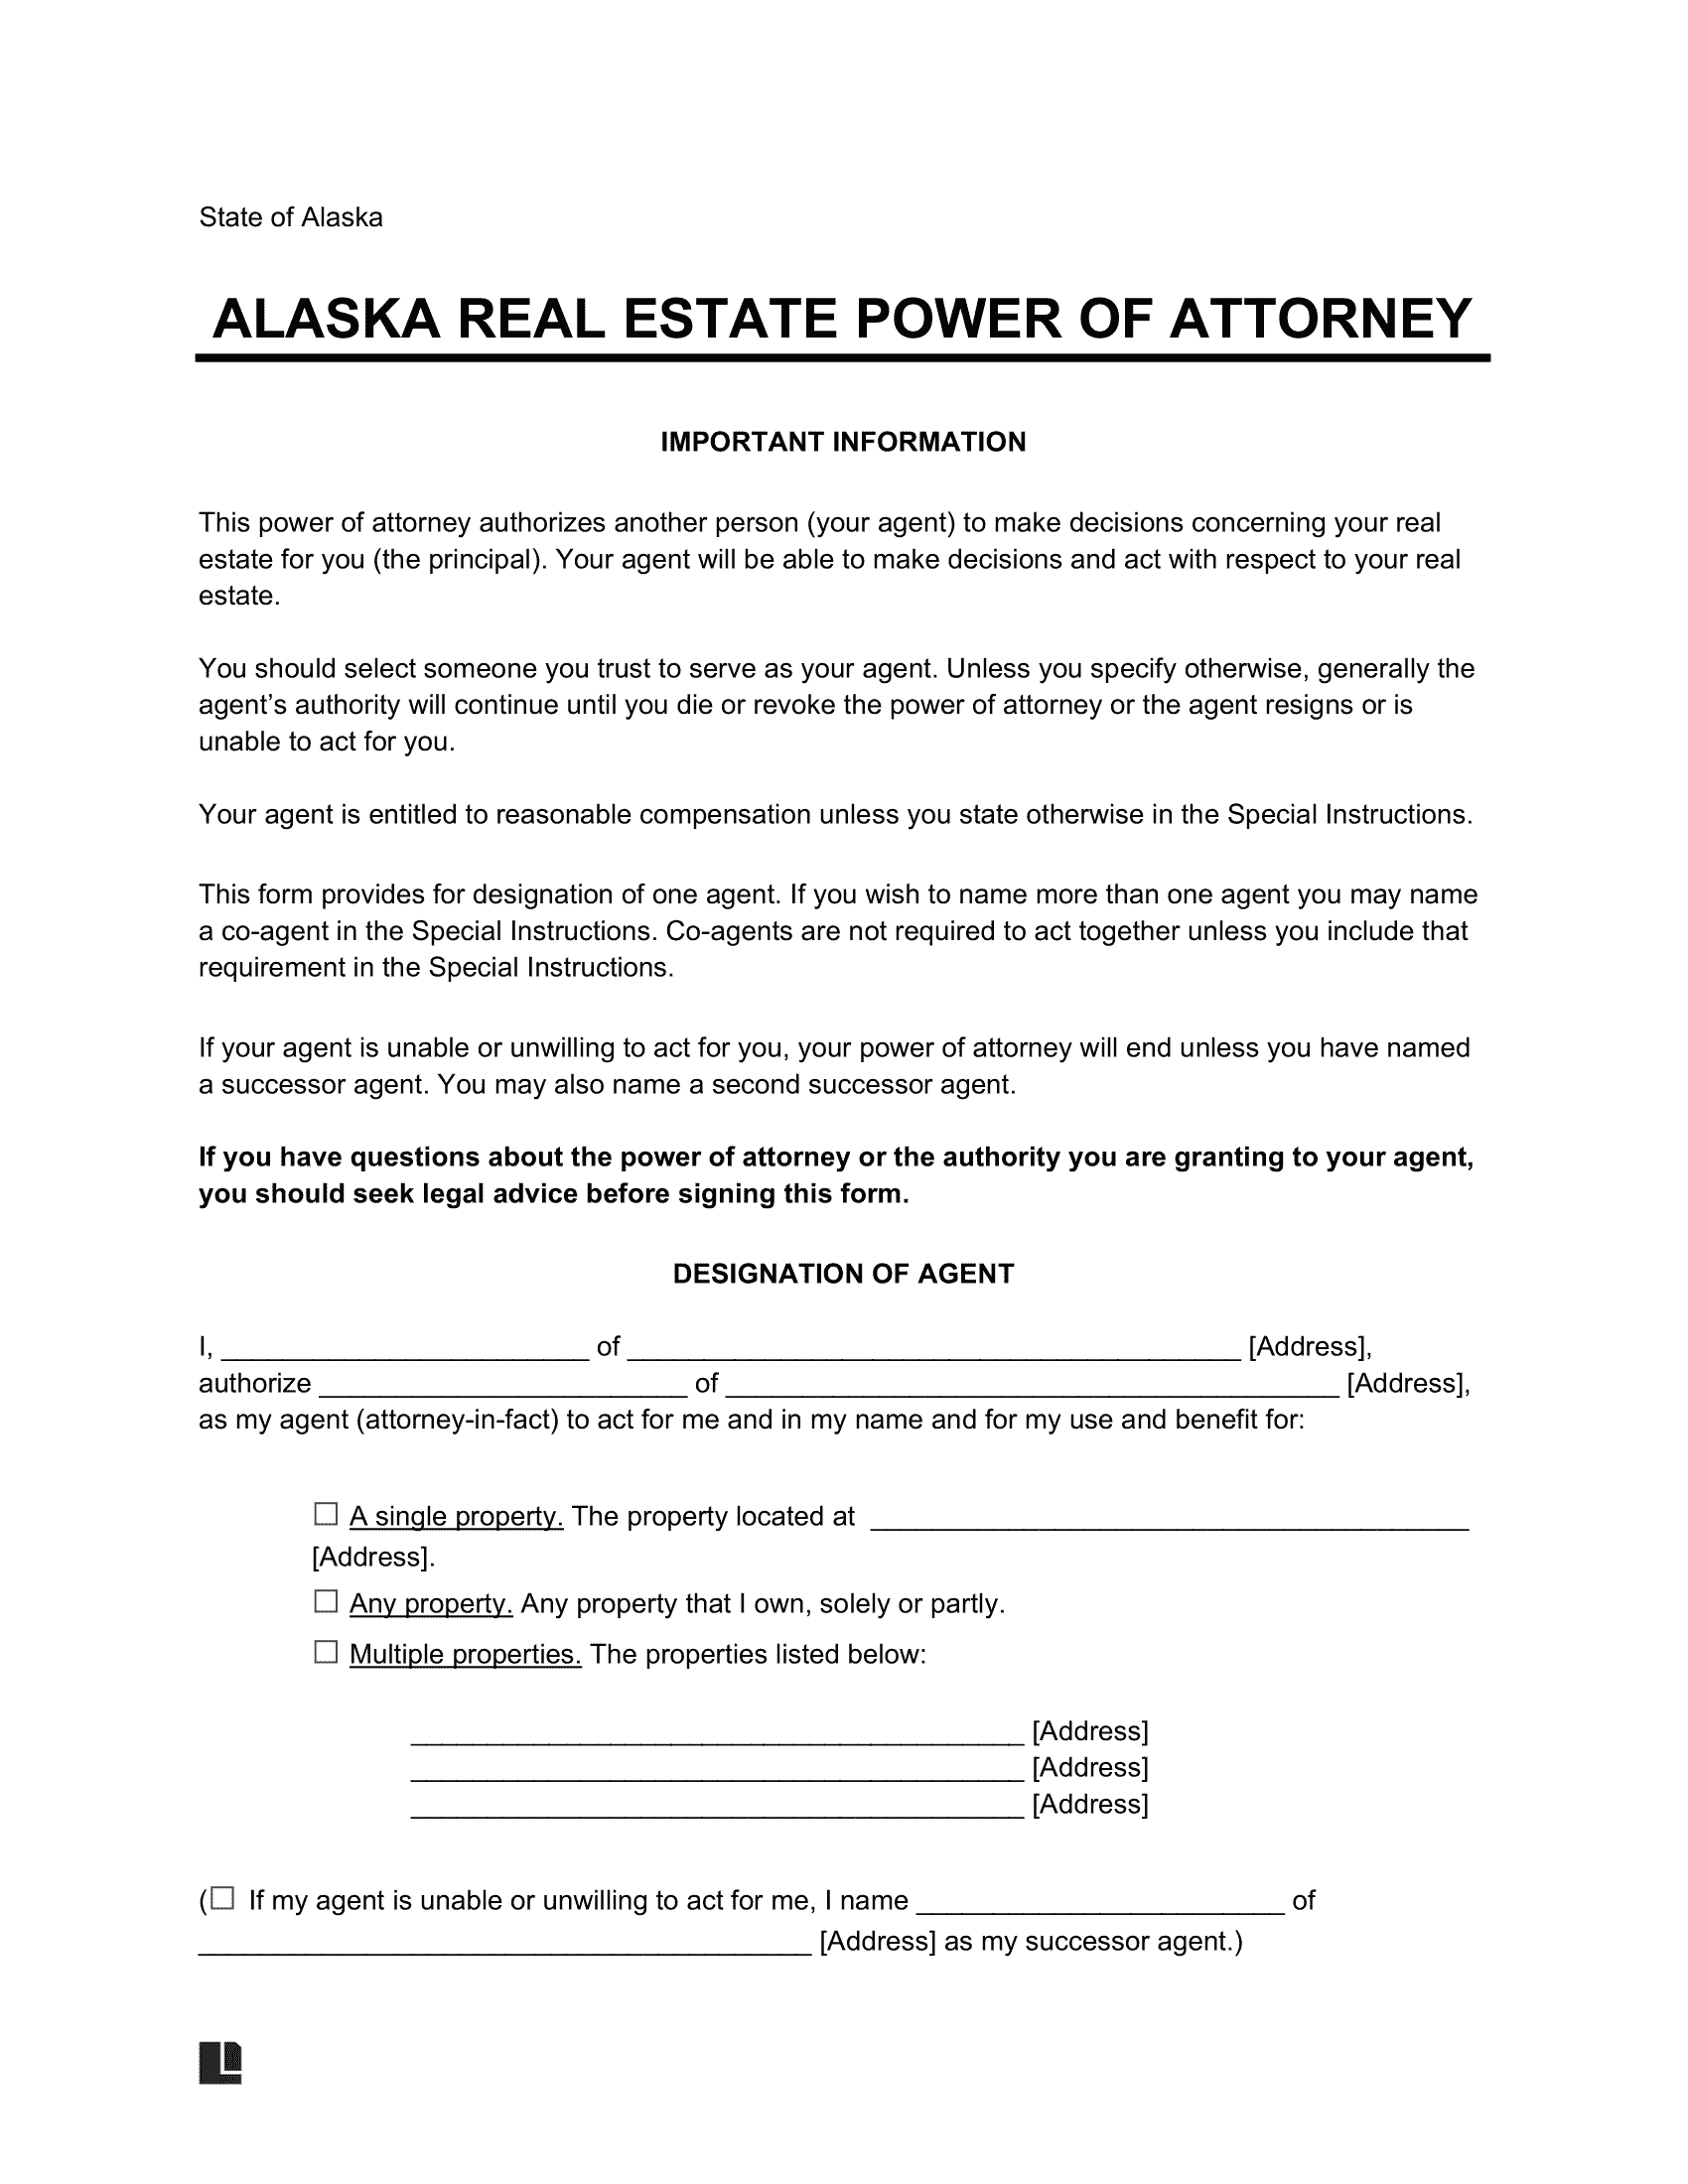 Alaska Real Estate Power of Attorney Form